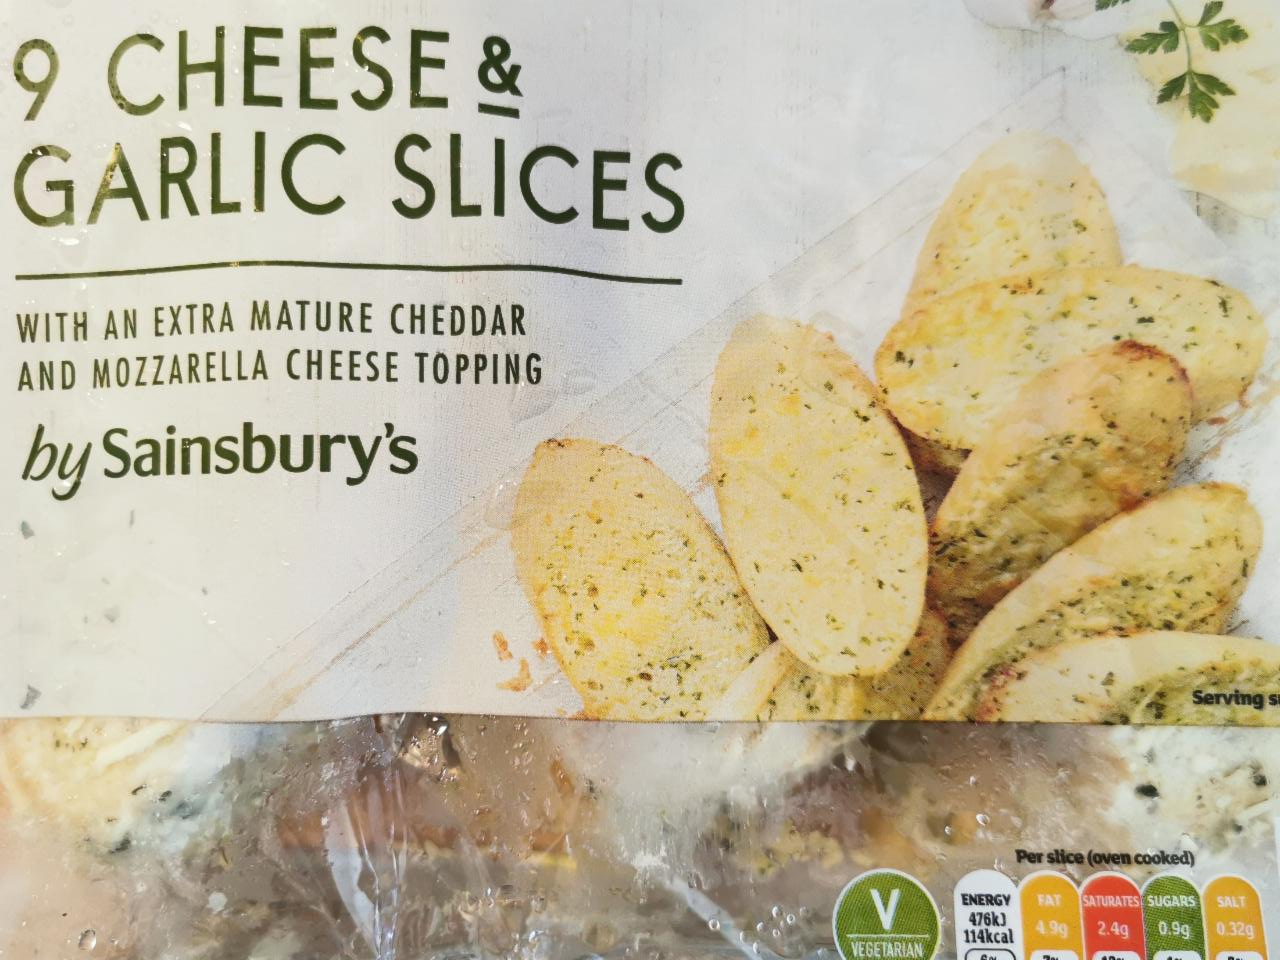 Fotografie - 9 Cheese & Garlic Slices by Sainsbury's 